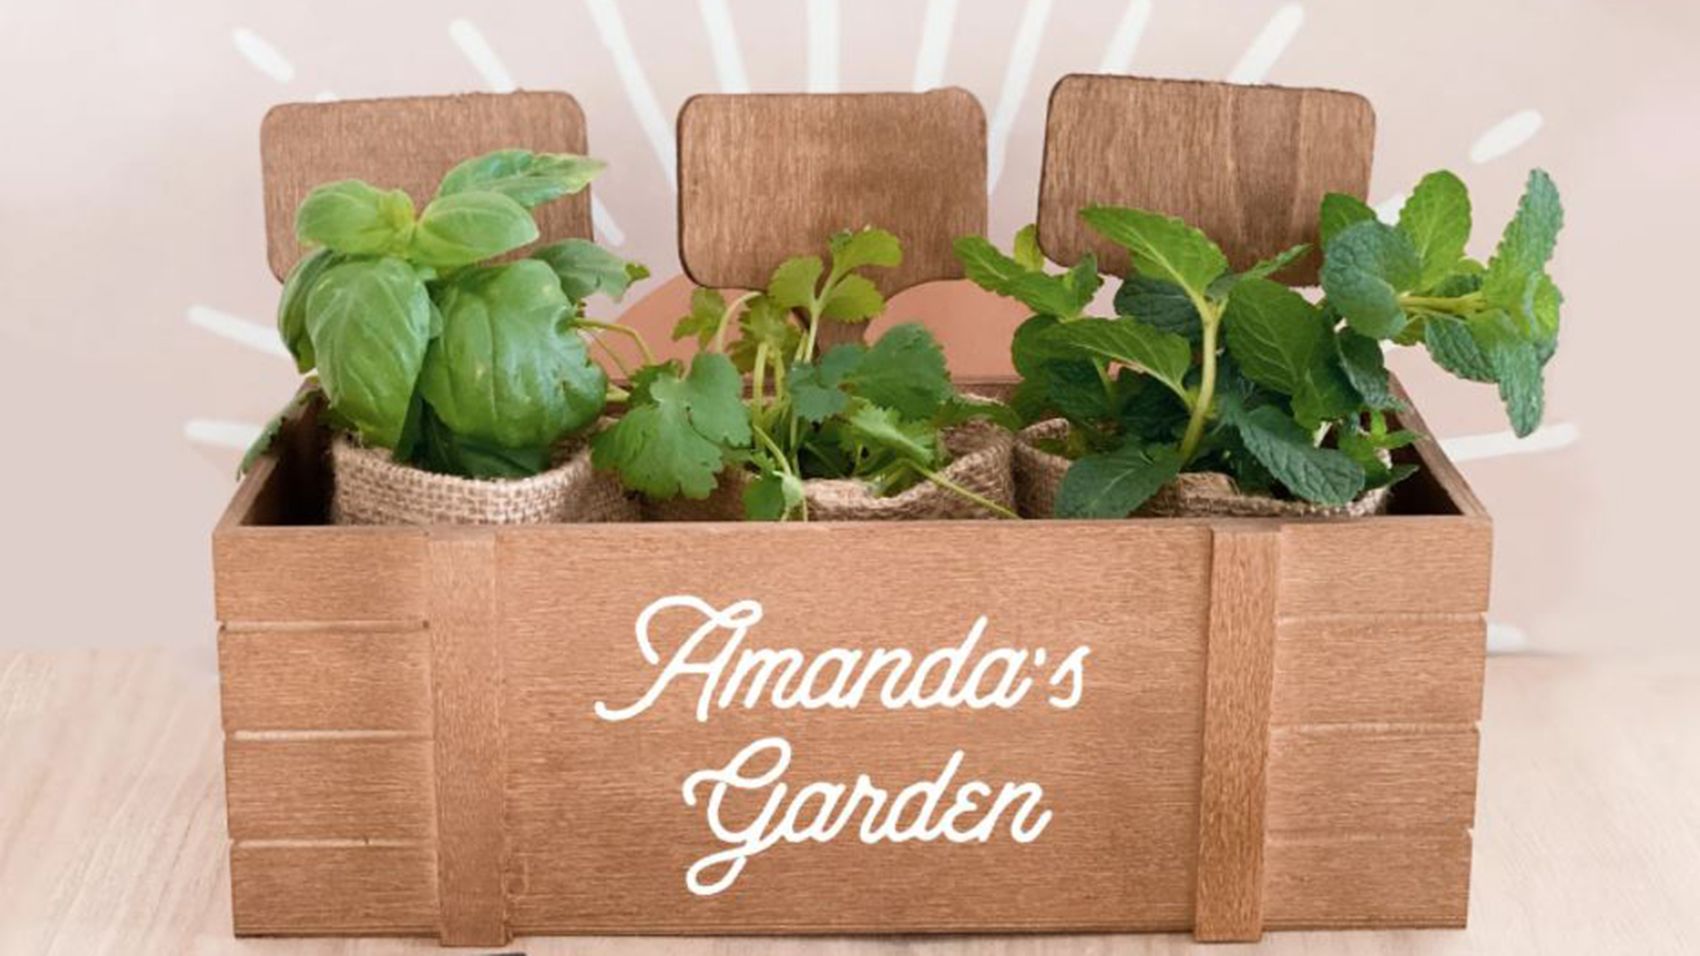 https://media.cnn.com/api/v1/images/stellar/prod/220414130542-momdaygarden-personalized-herb-garden-kit.jpg?c=original